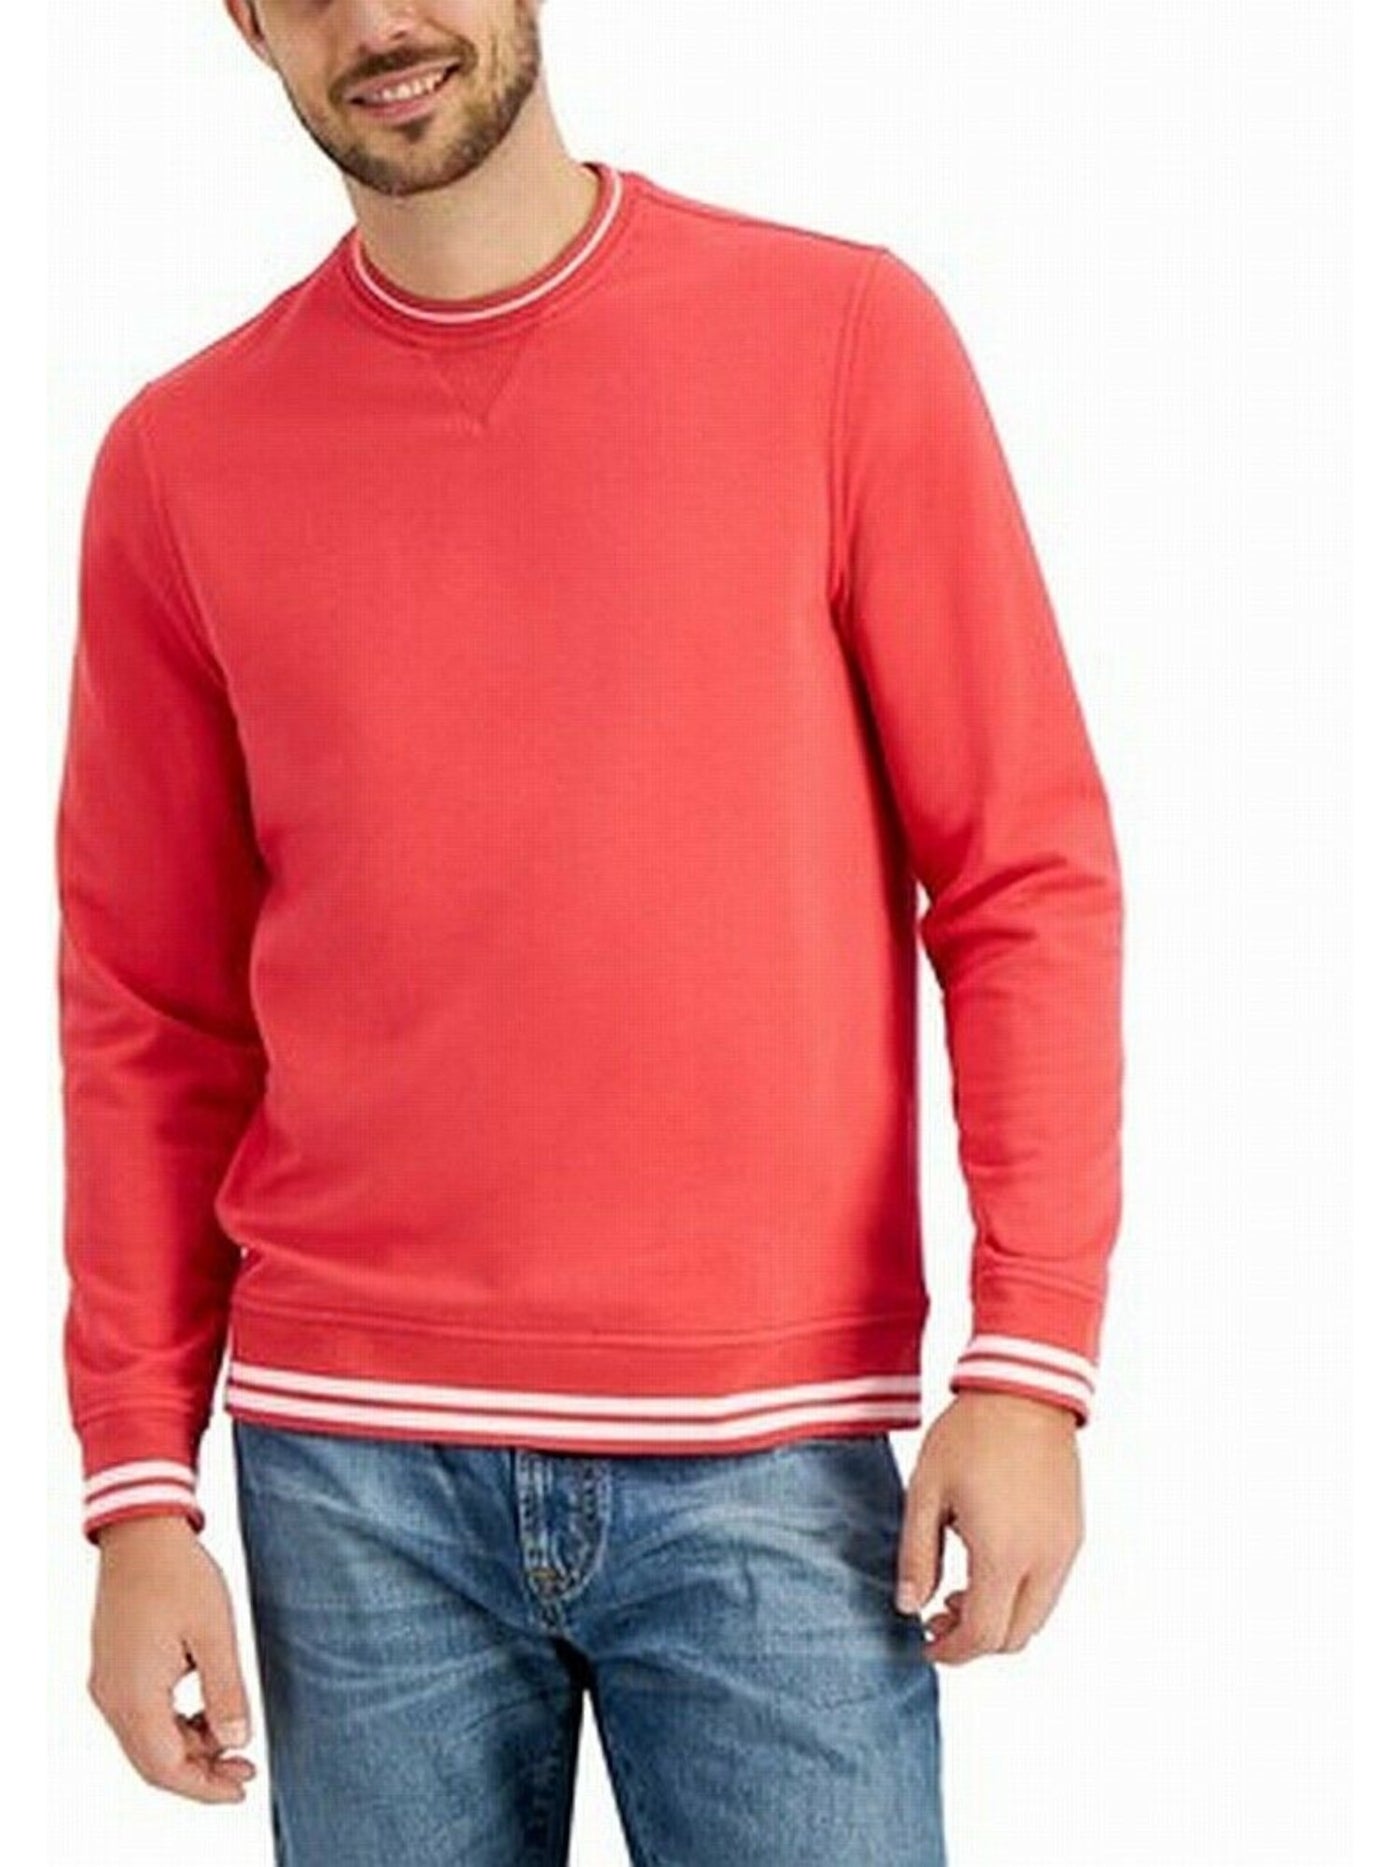 CLUBROOM Mens Red Crew Neck Classic Fit Stretch Sweatshirt XL